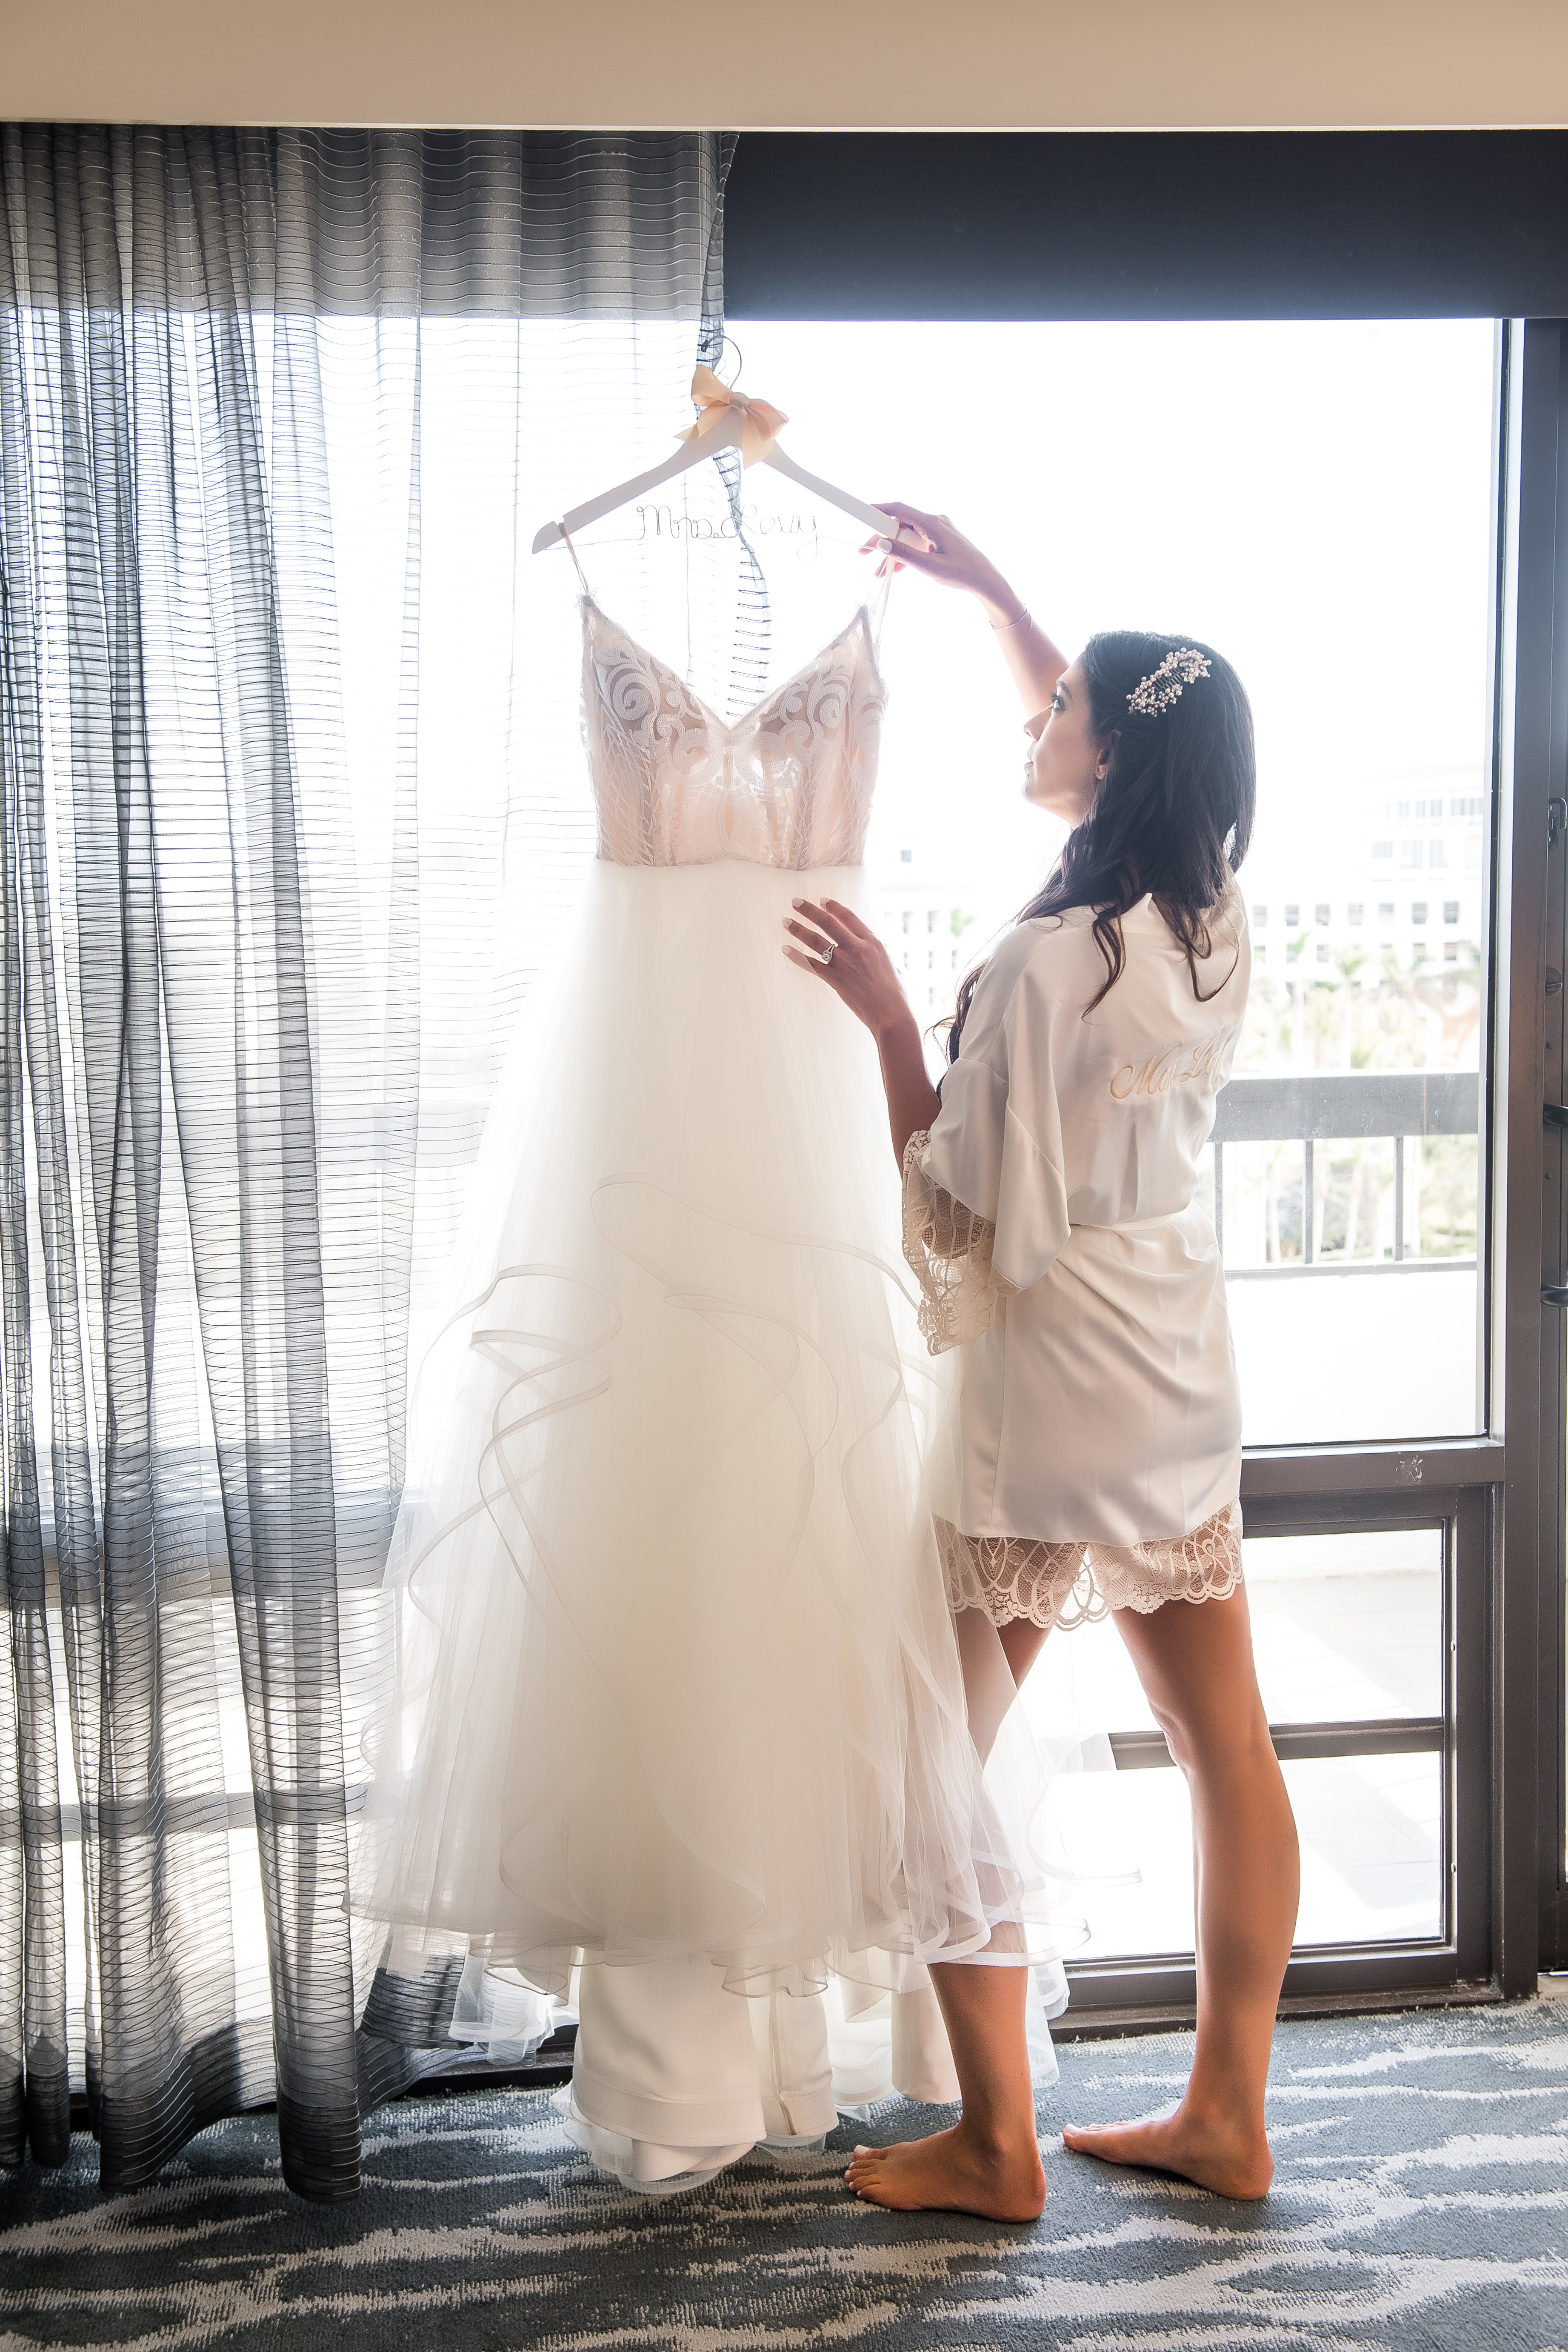 Bride hanging up wedding dress